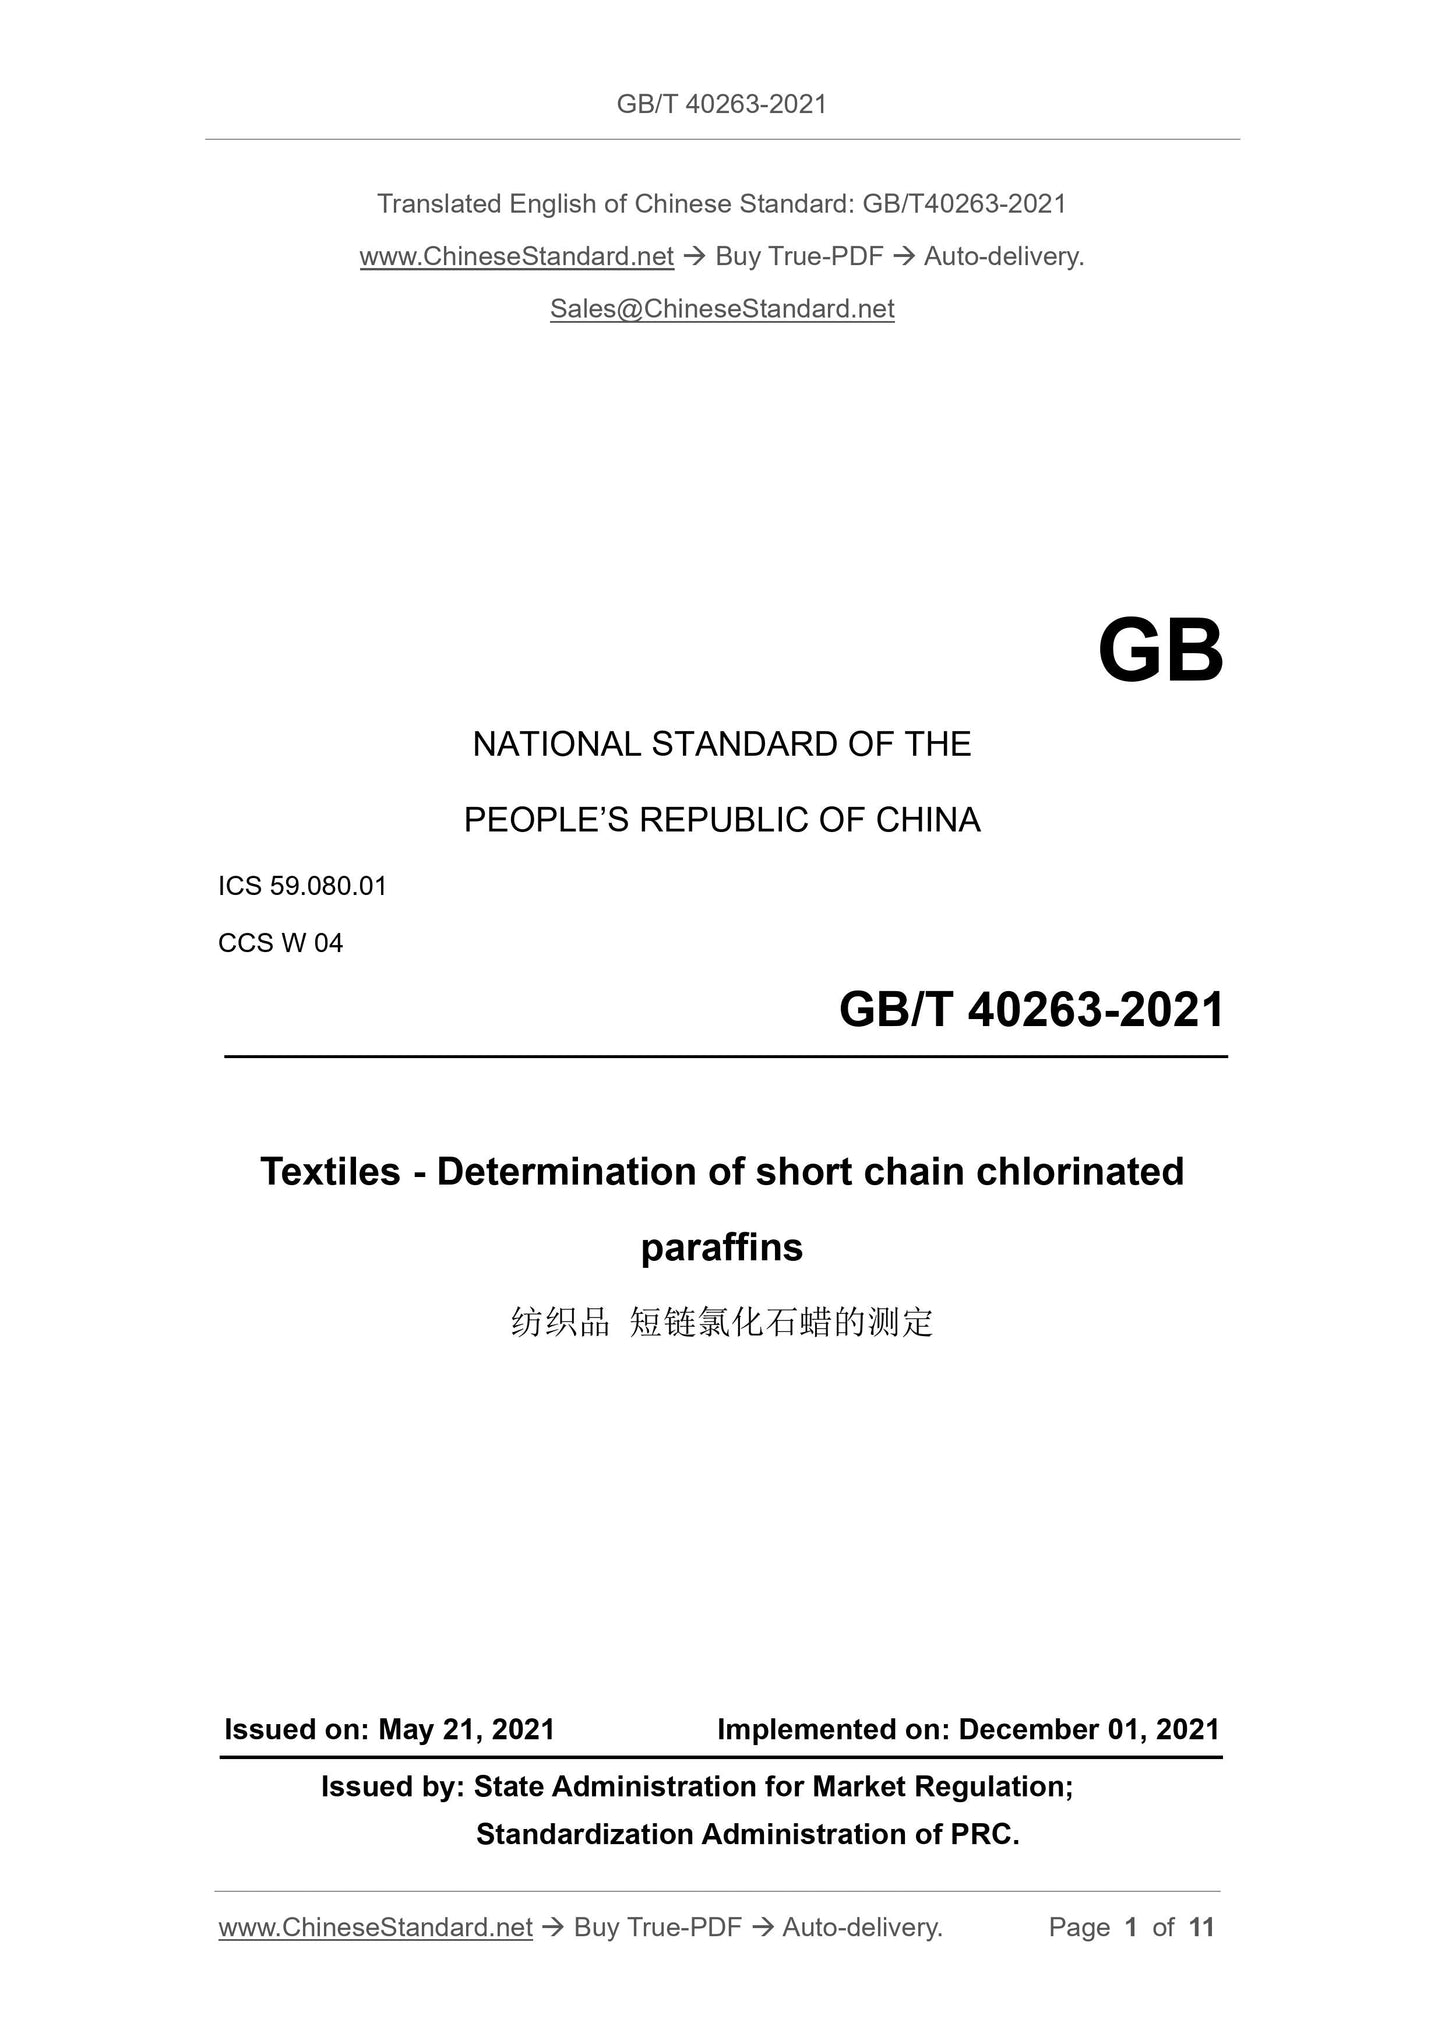 GBT40263-2021 Page 1